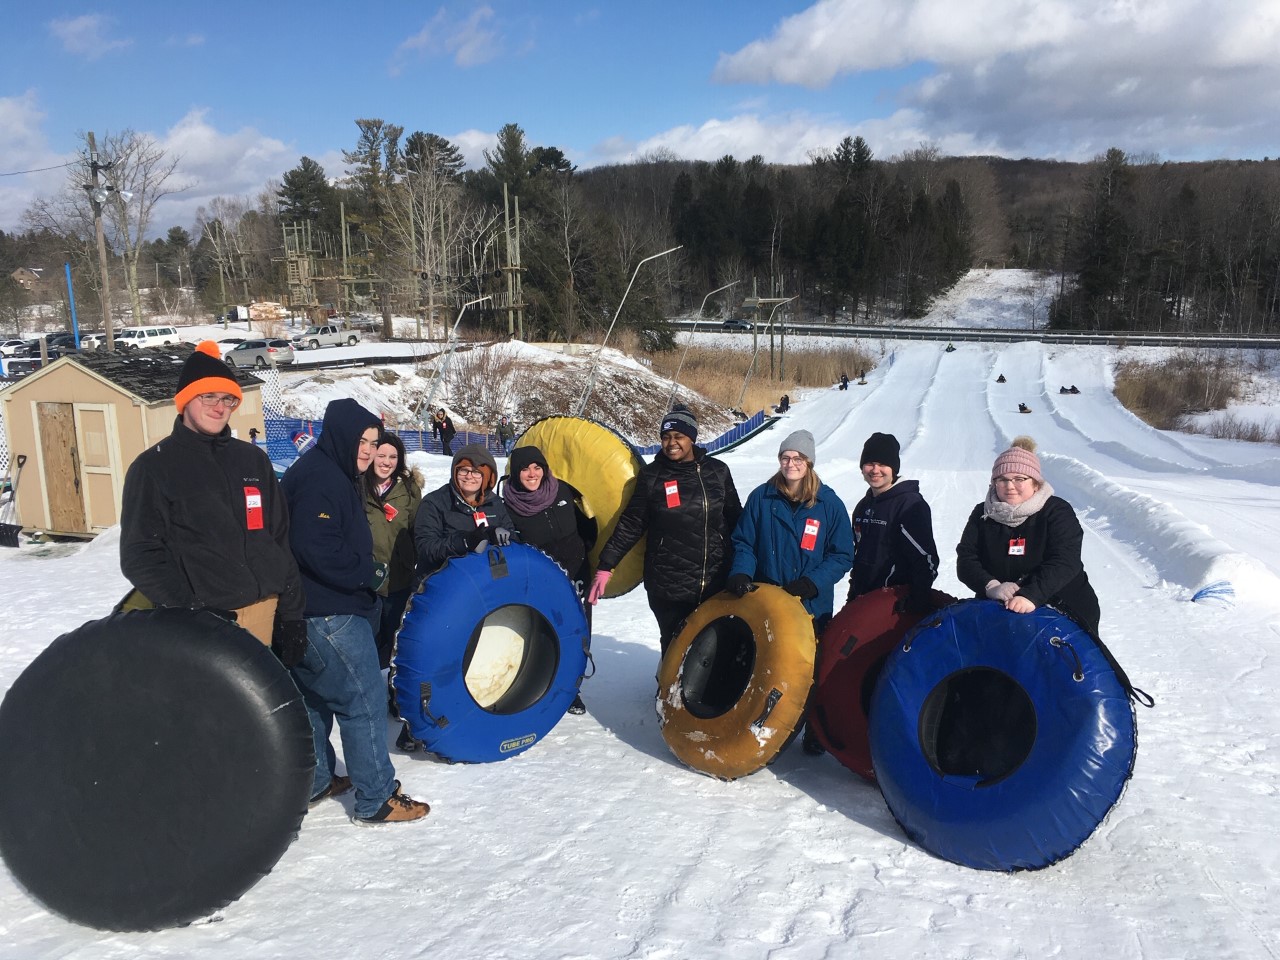 Mcla Students on a SAC tubing trip winter 2020.